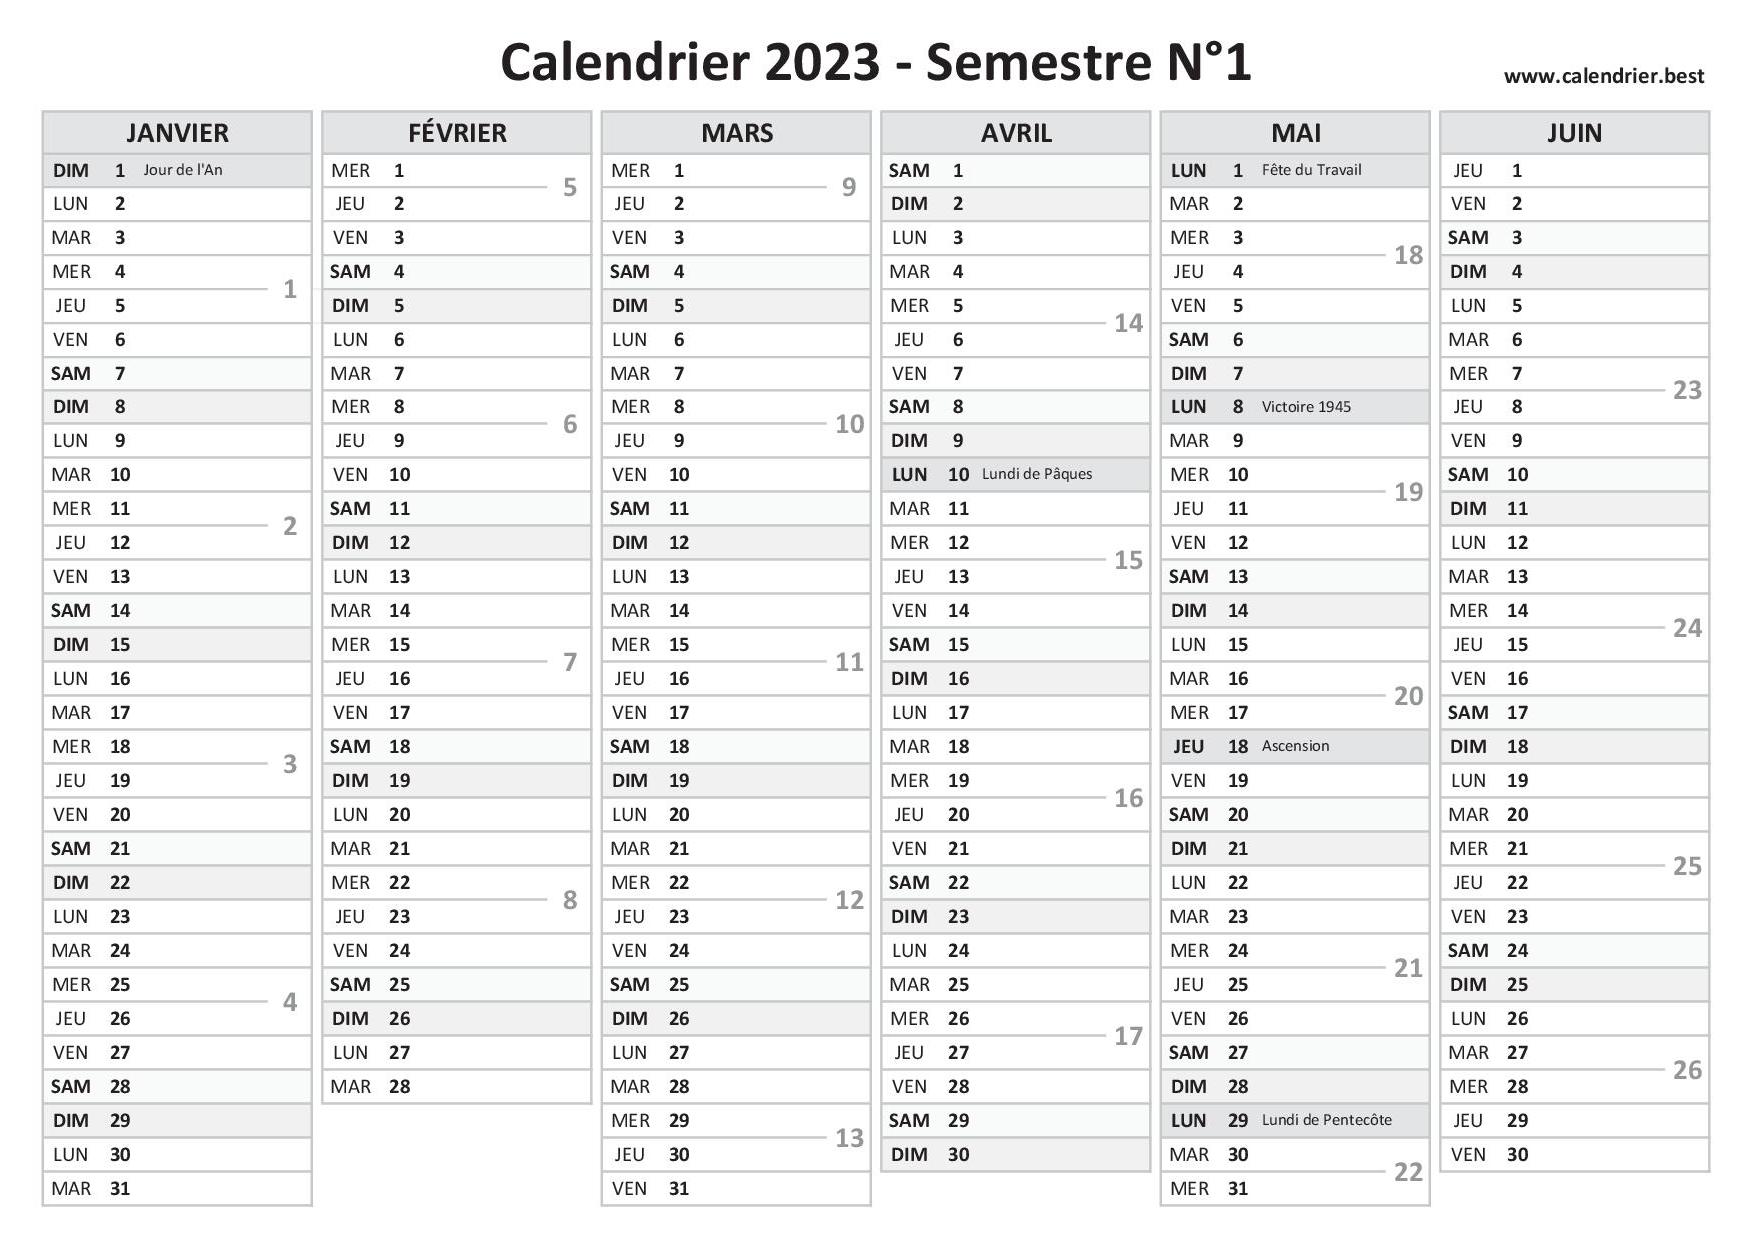 Calendrier 2023, 2ème semestre